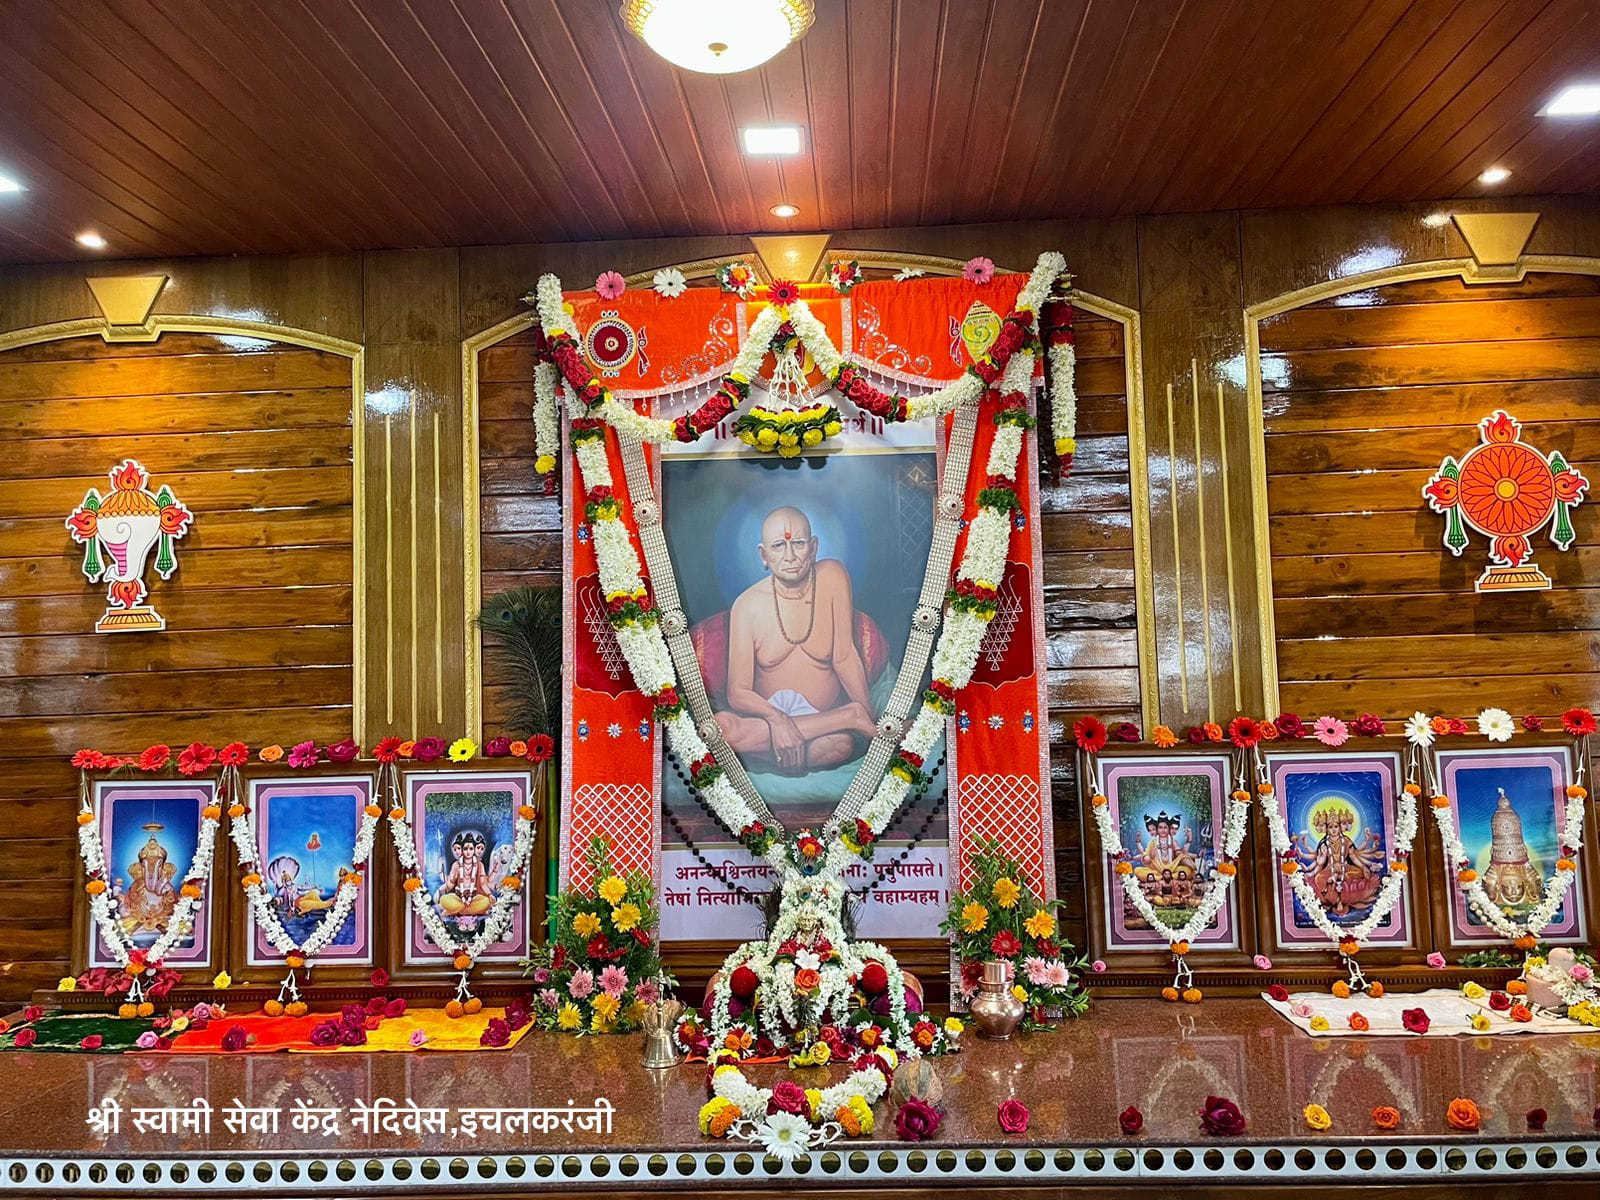 Dindori Pranith Shri Swami Samarth Seva Kendra celebrated Guru Poornima with enthusiasm